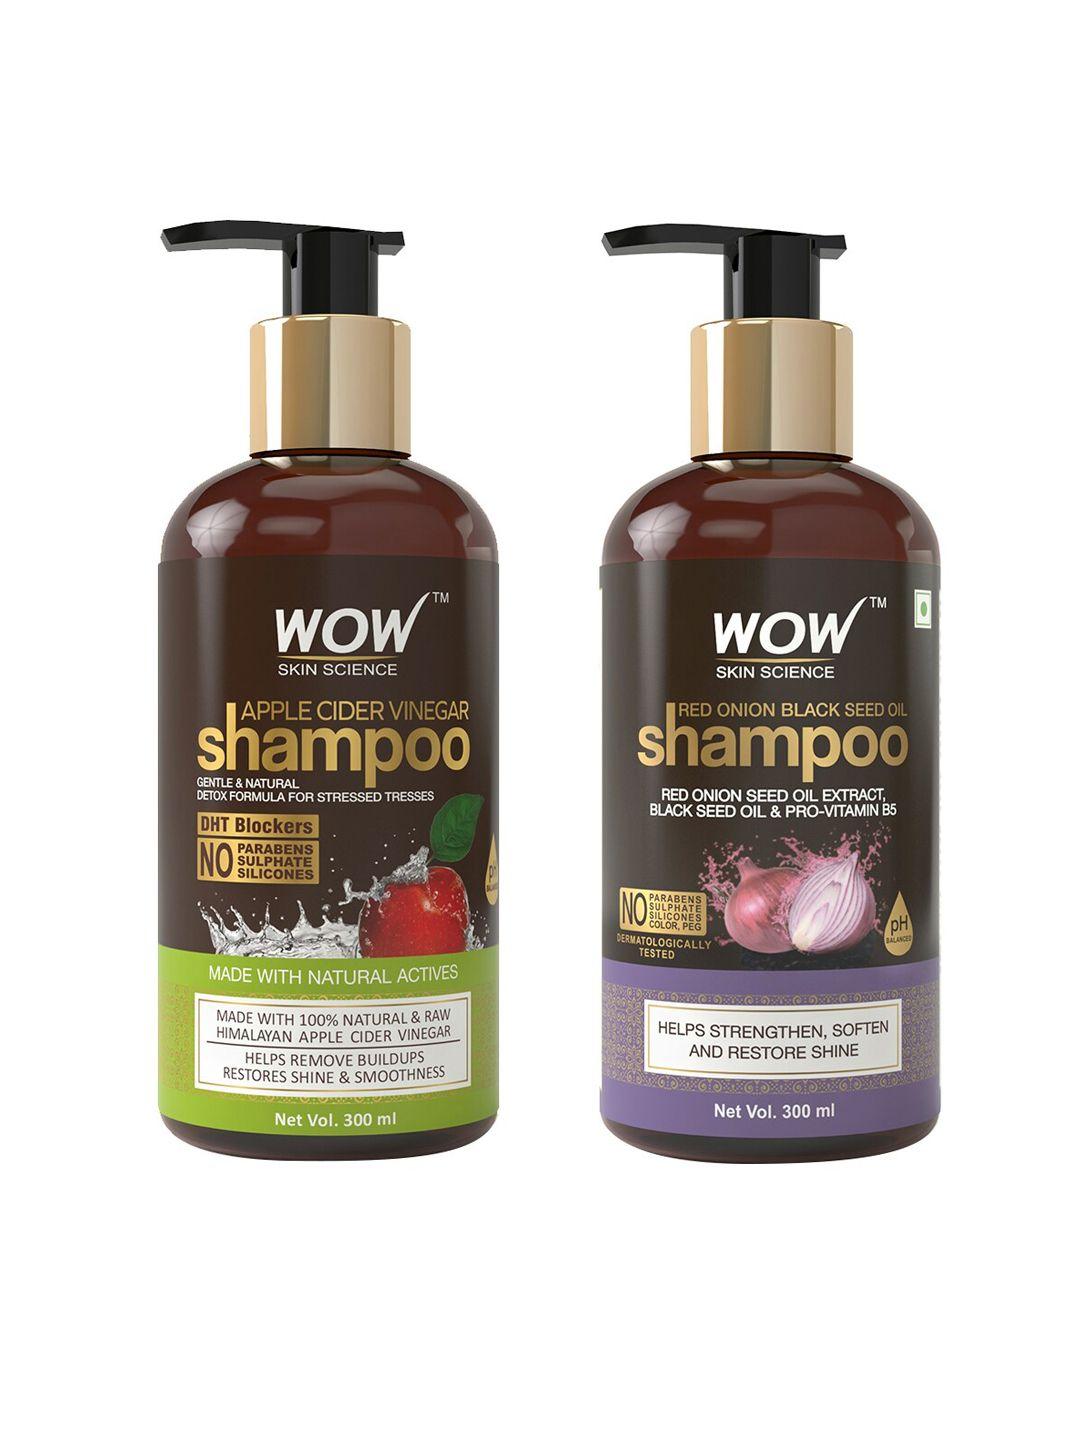 wow-skin-science-set-of-onion-black-seed-oil-shampoo-&-apple-cider-vinegar-shampoo